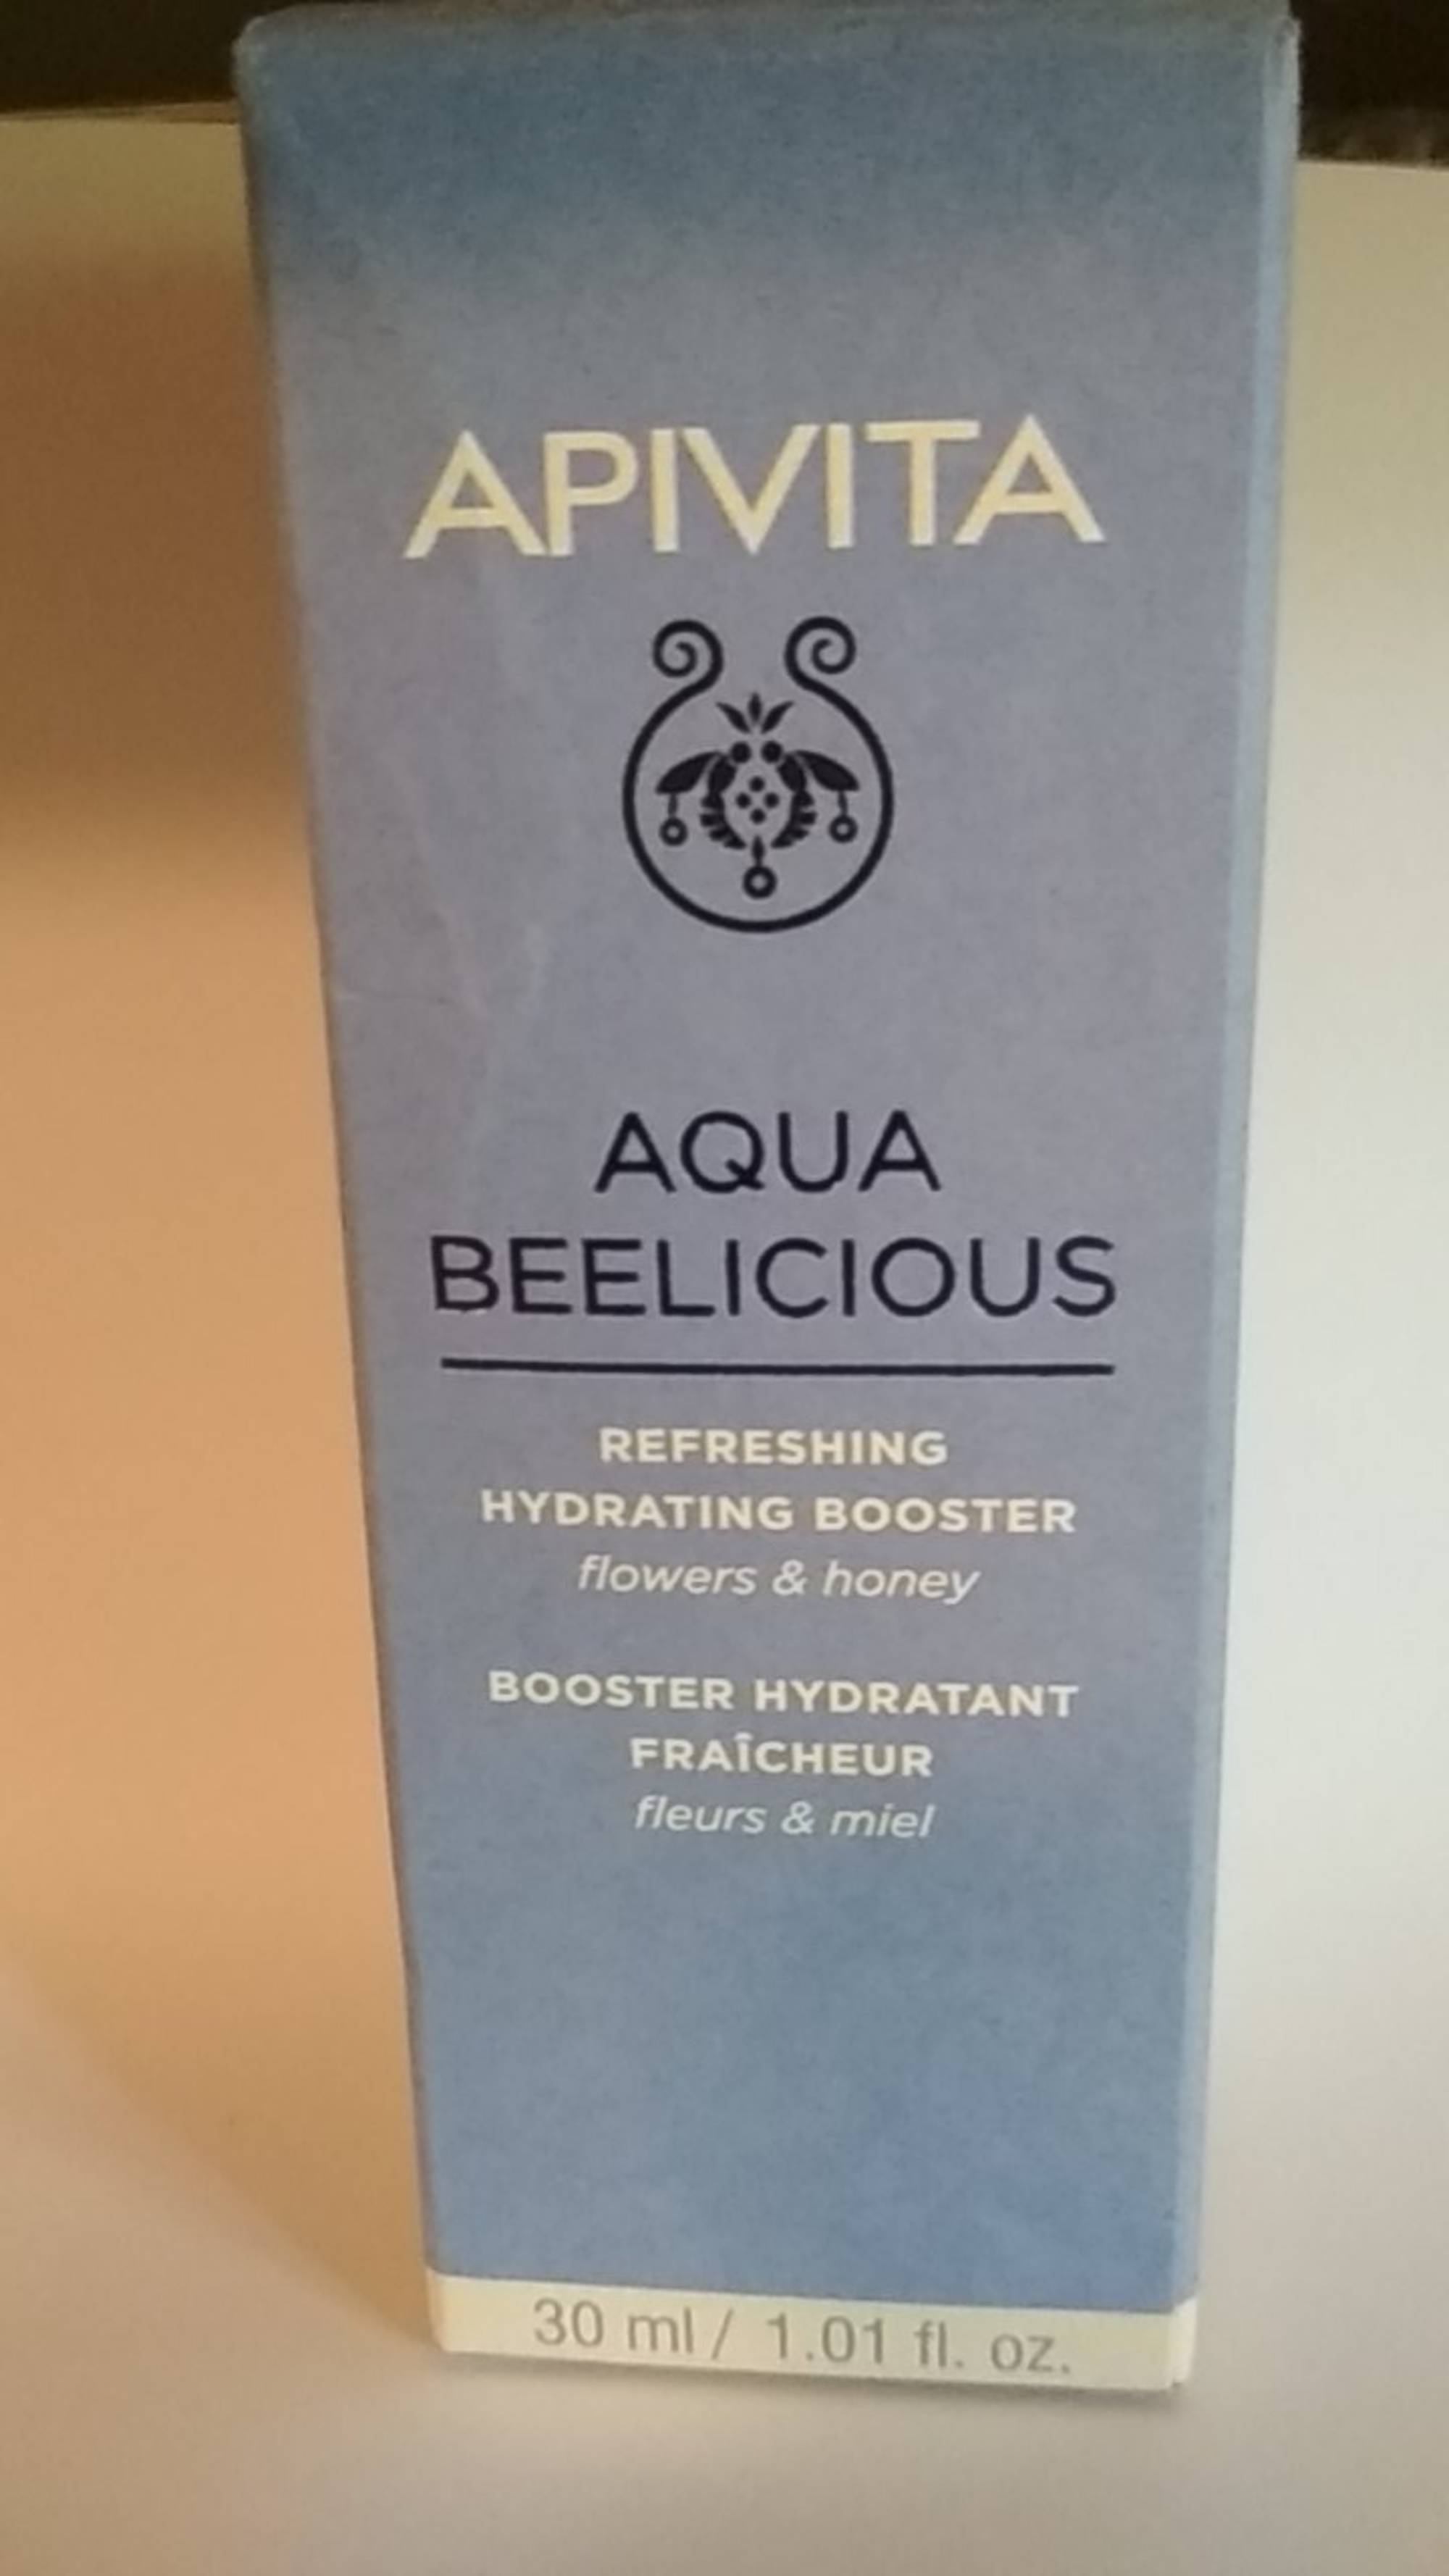 APIVITA - Aqua beelicious - Booster hydratant fraîcheur